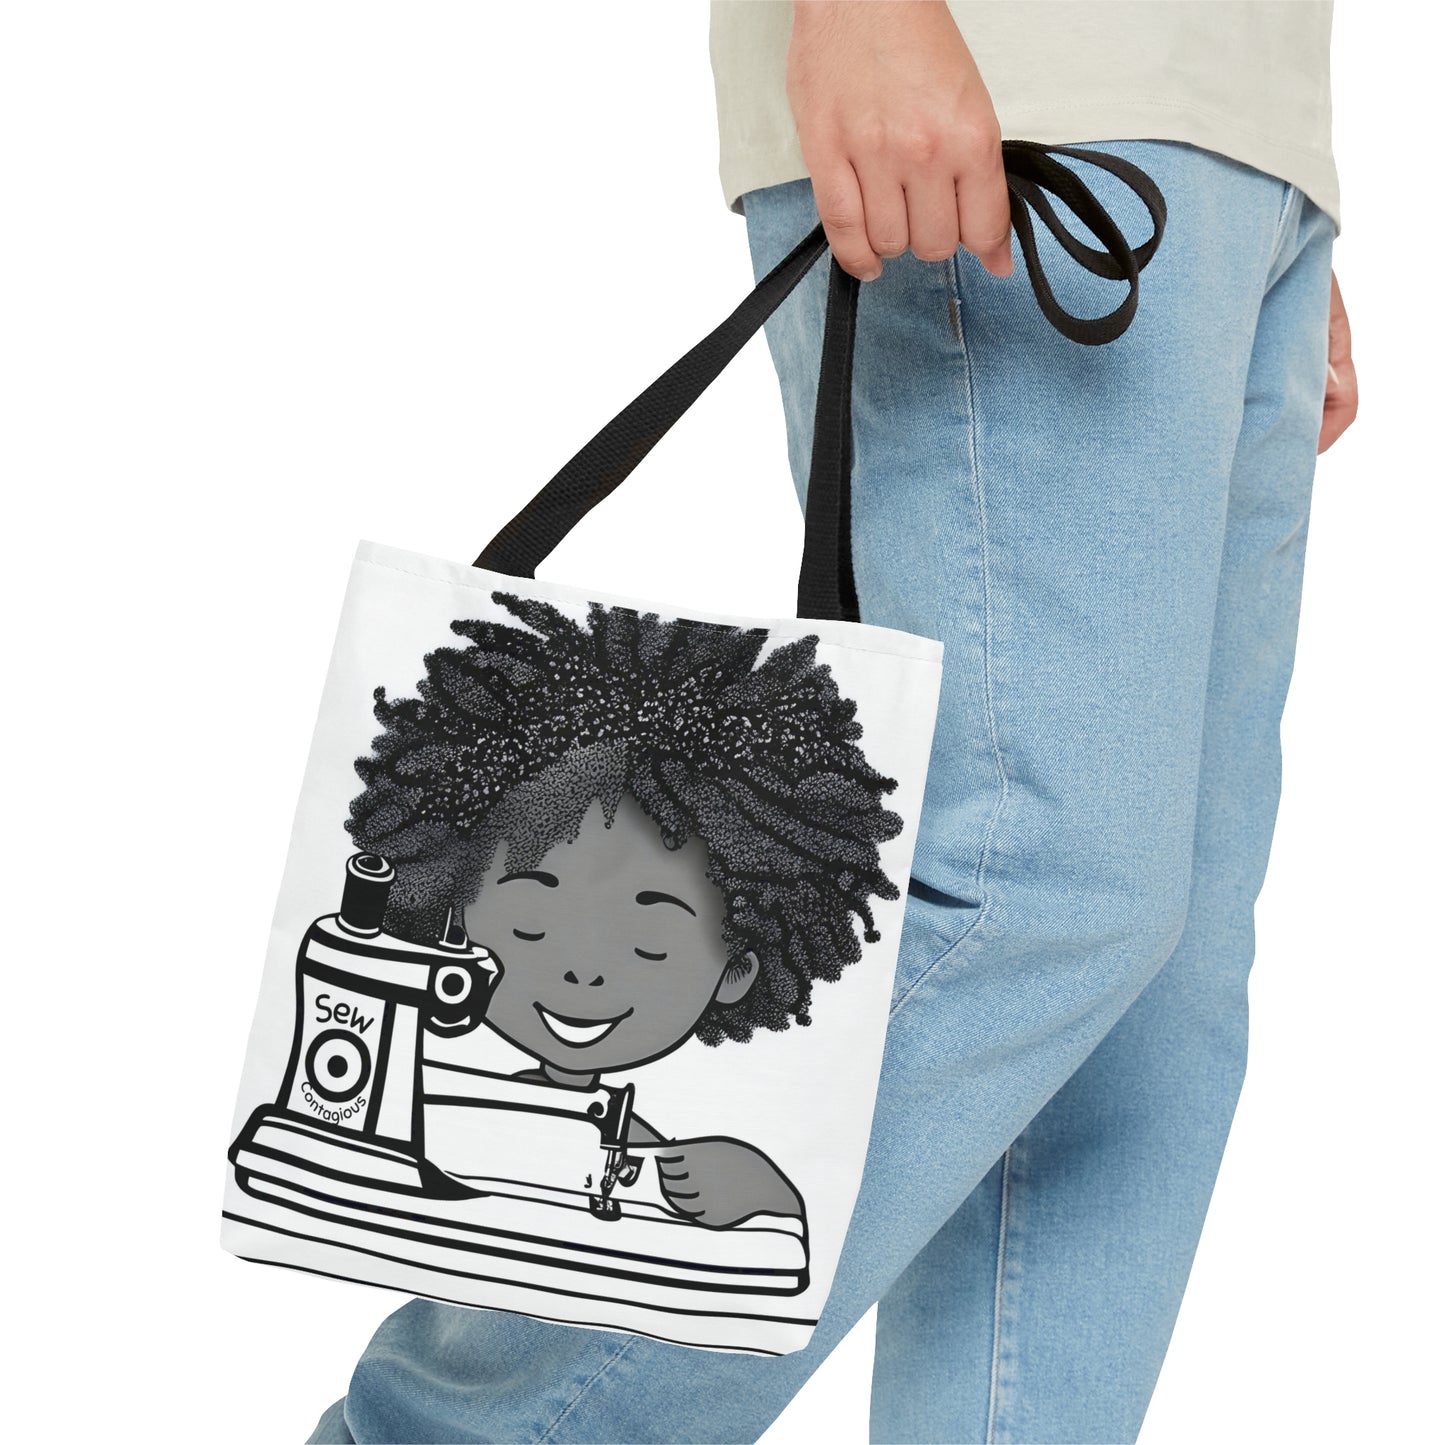 Afro Cutie Tote Bag